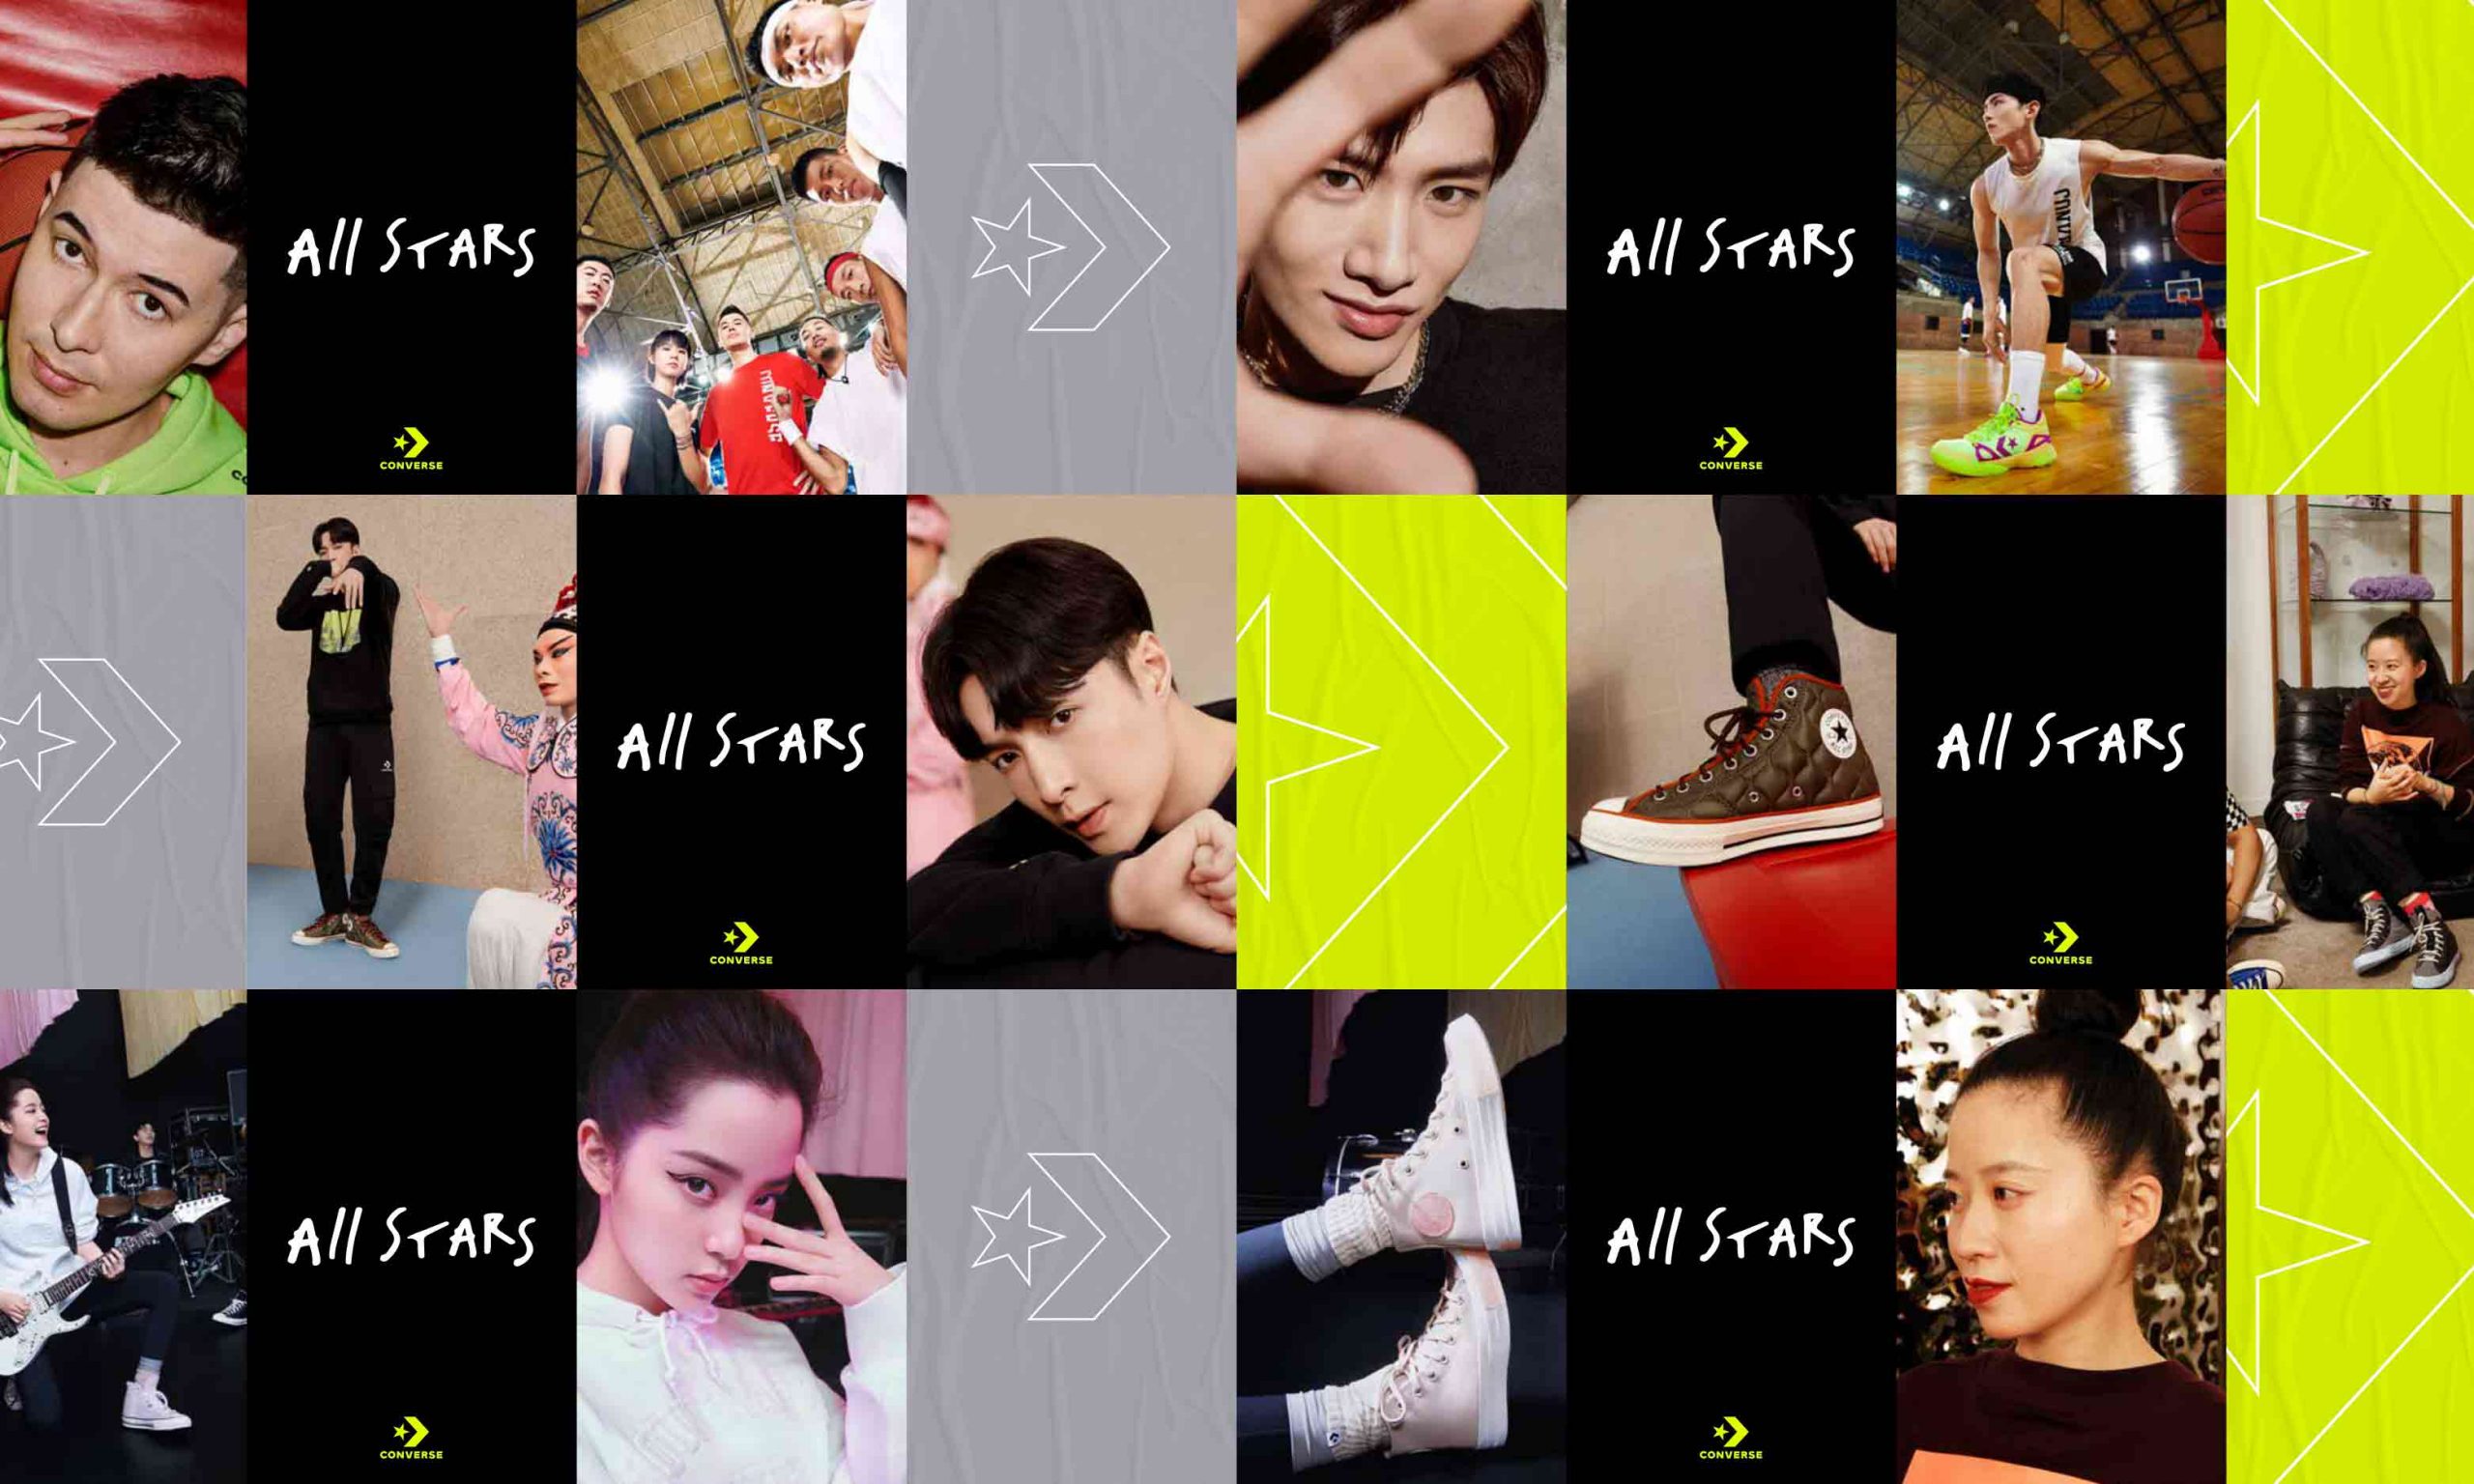 CONVERSE 发布亚洲 ALL STARS 品牌活动